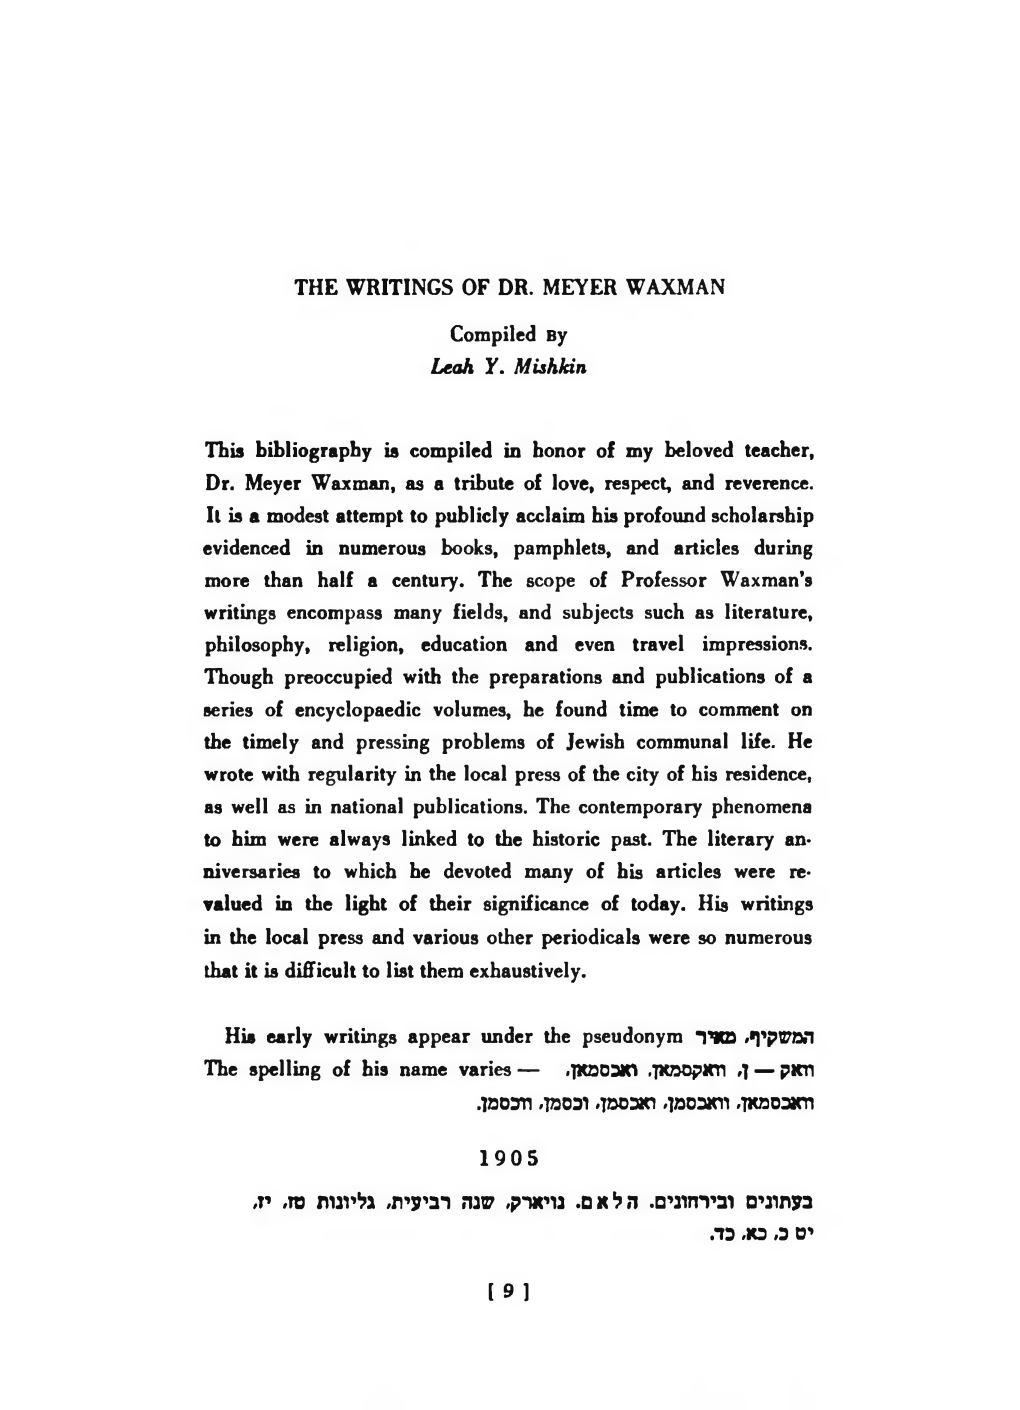 The Writings of Dr. Meyer Waxman